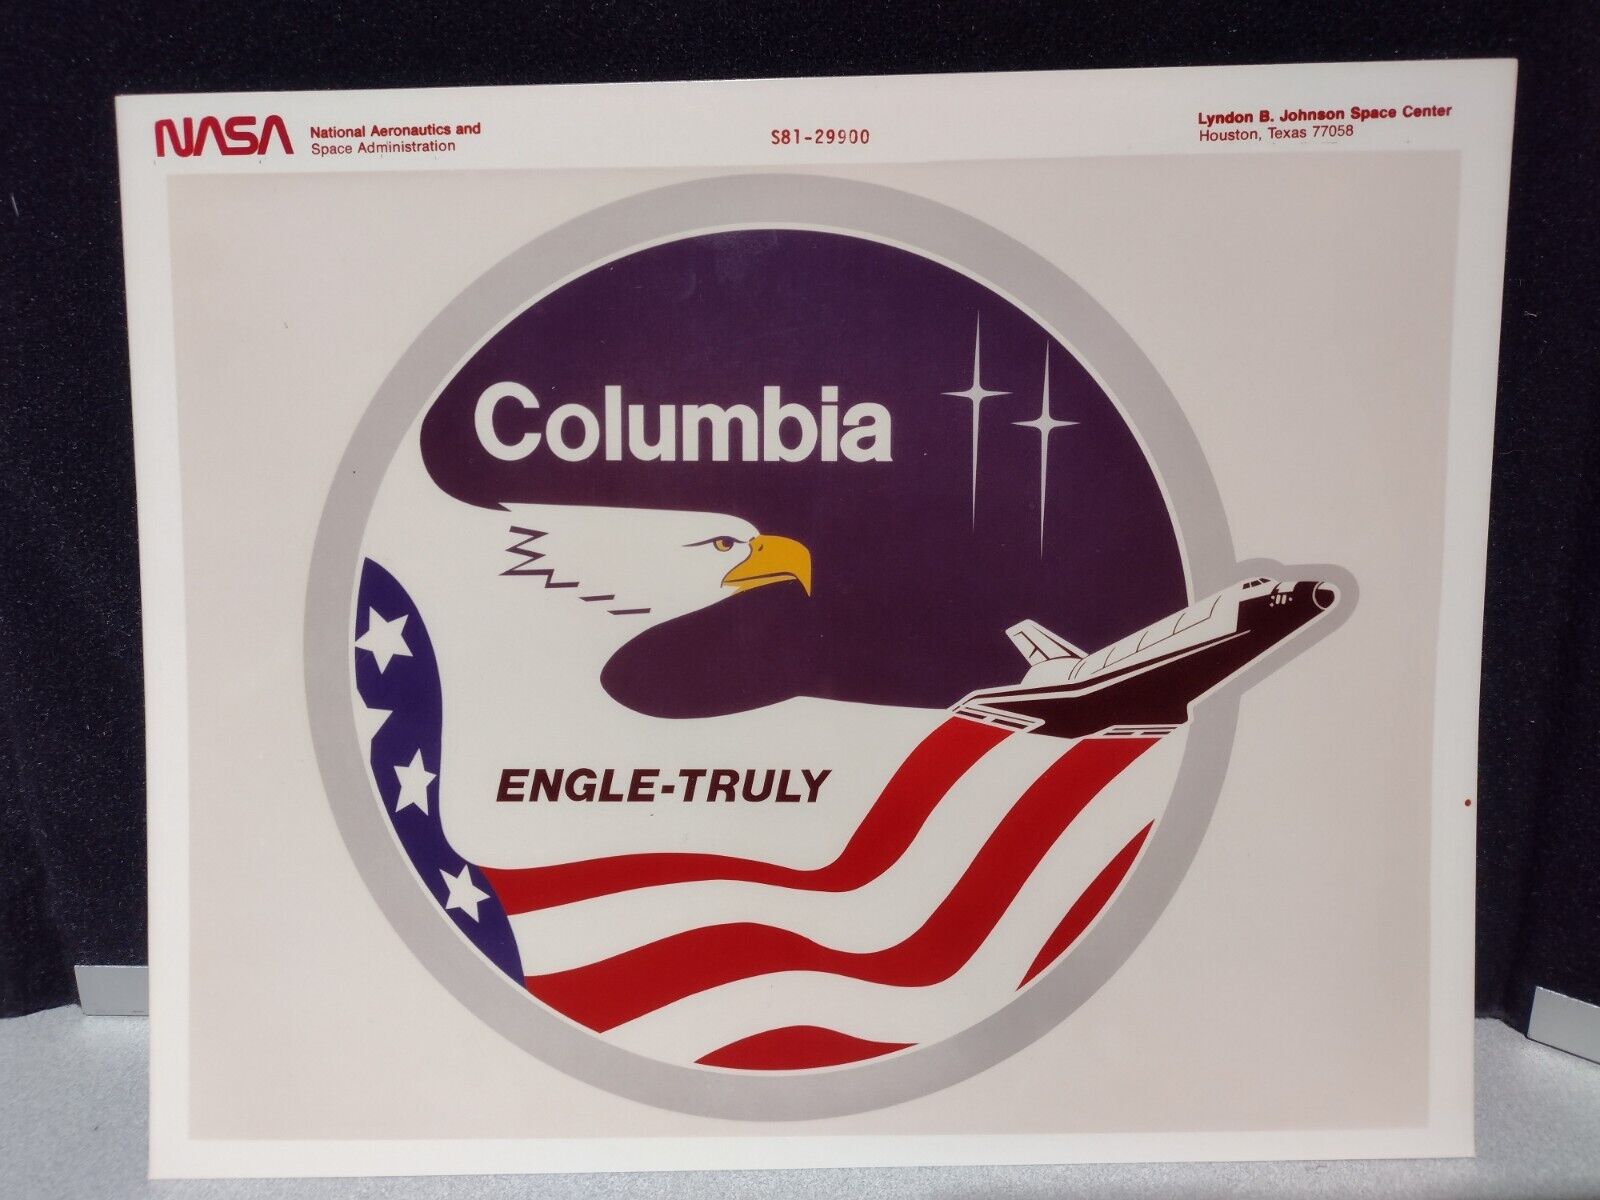 1981 NASA STS-2 Columbia Photo - Red Letter - S81-29900 KODAK Paper